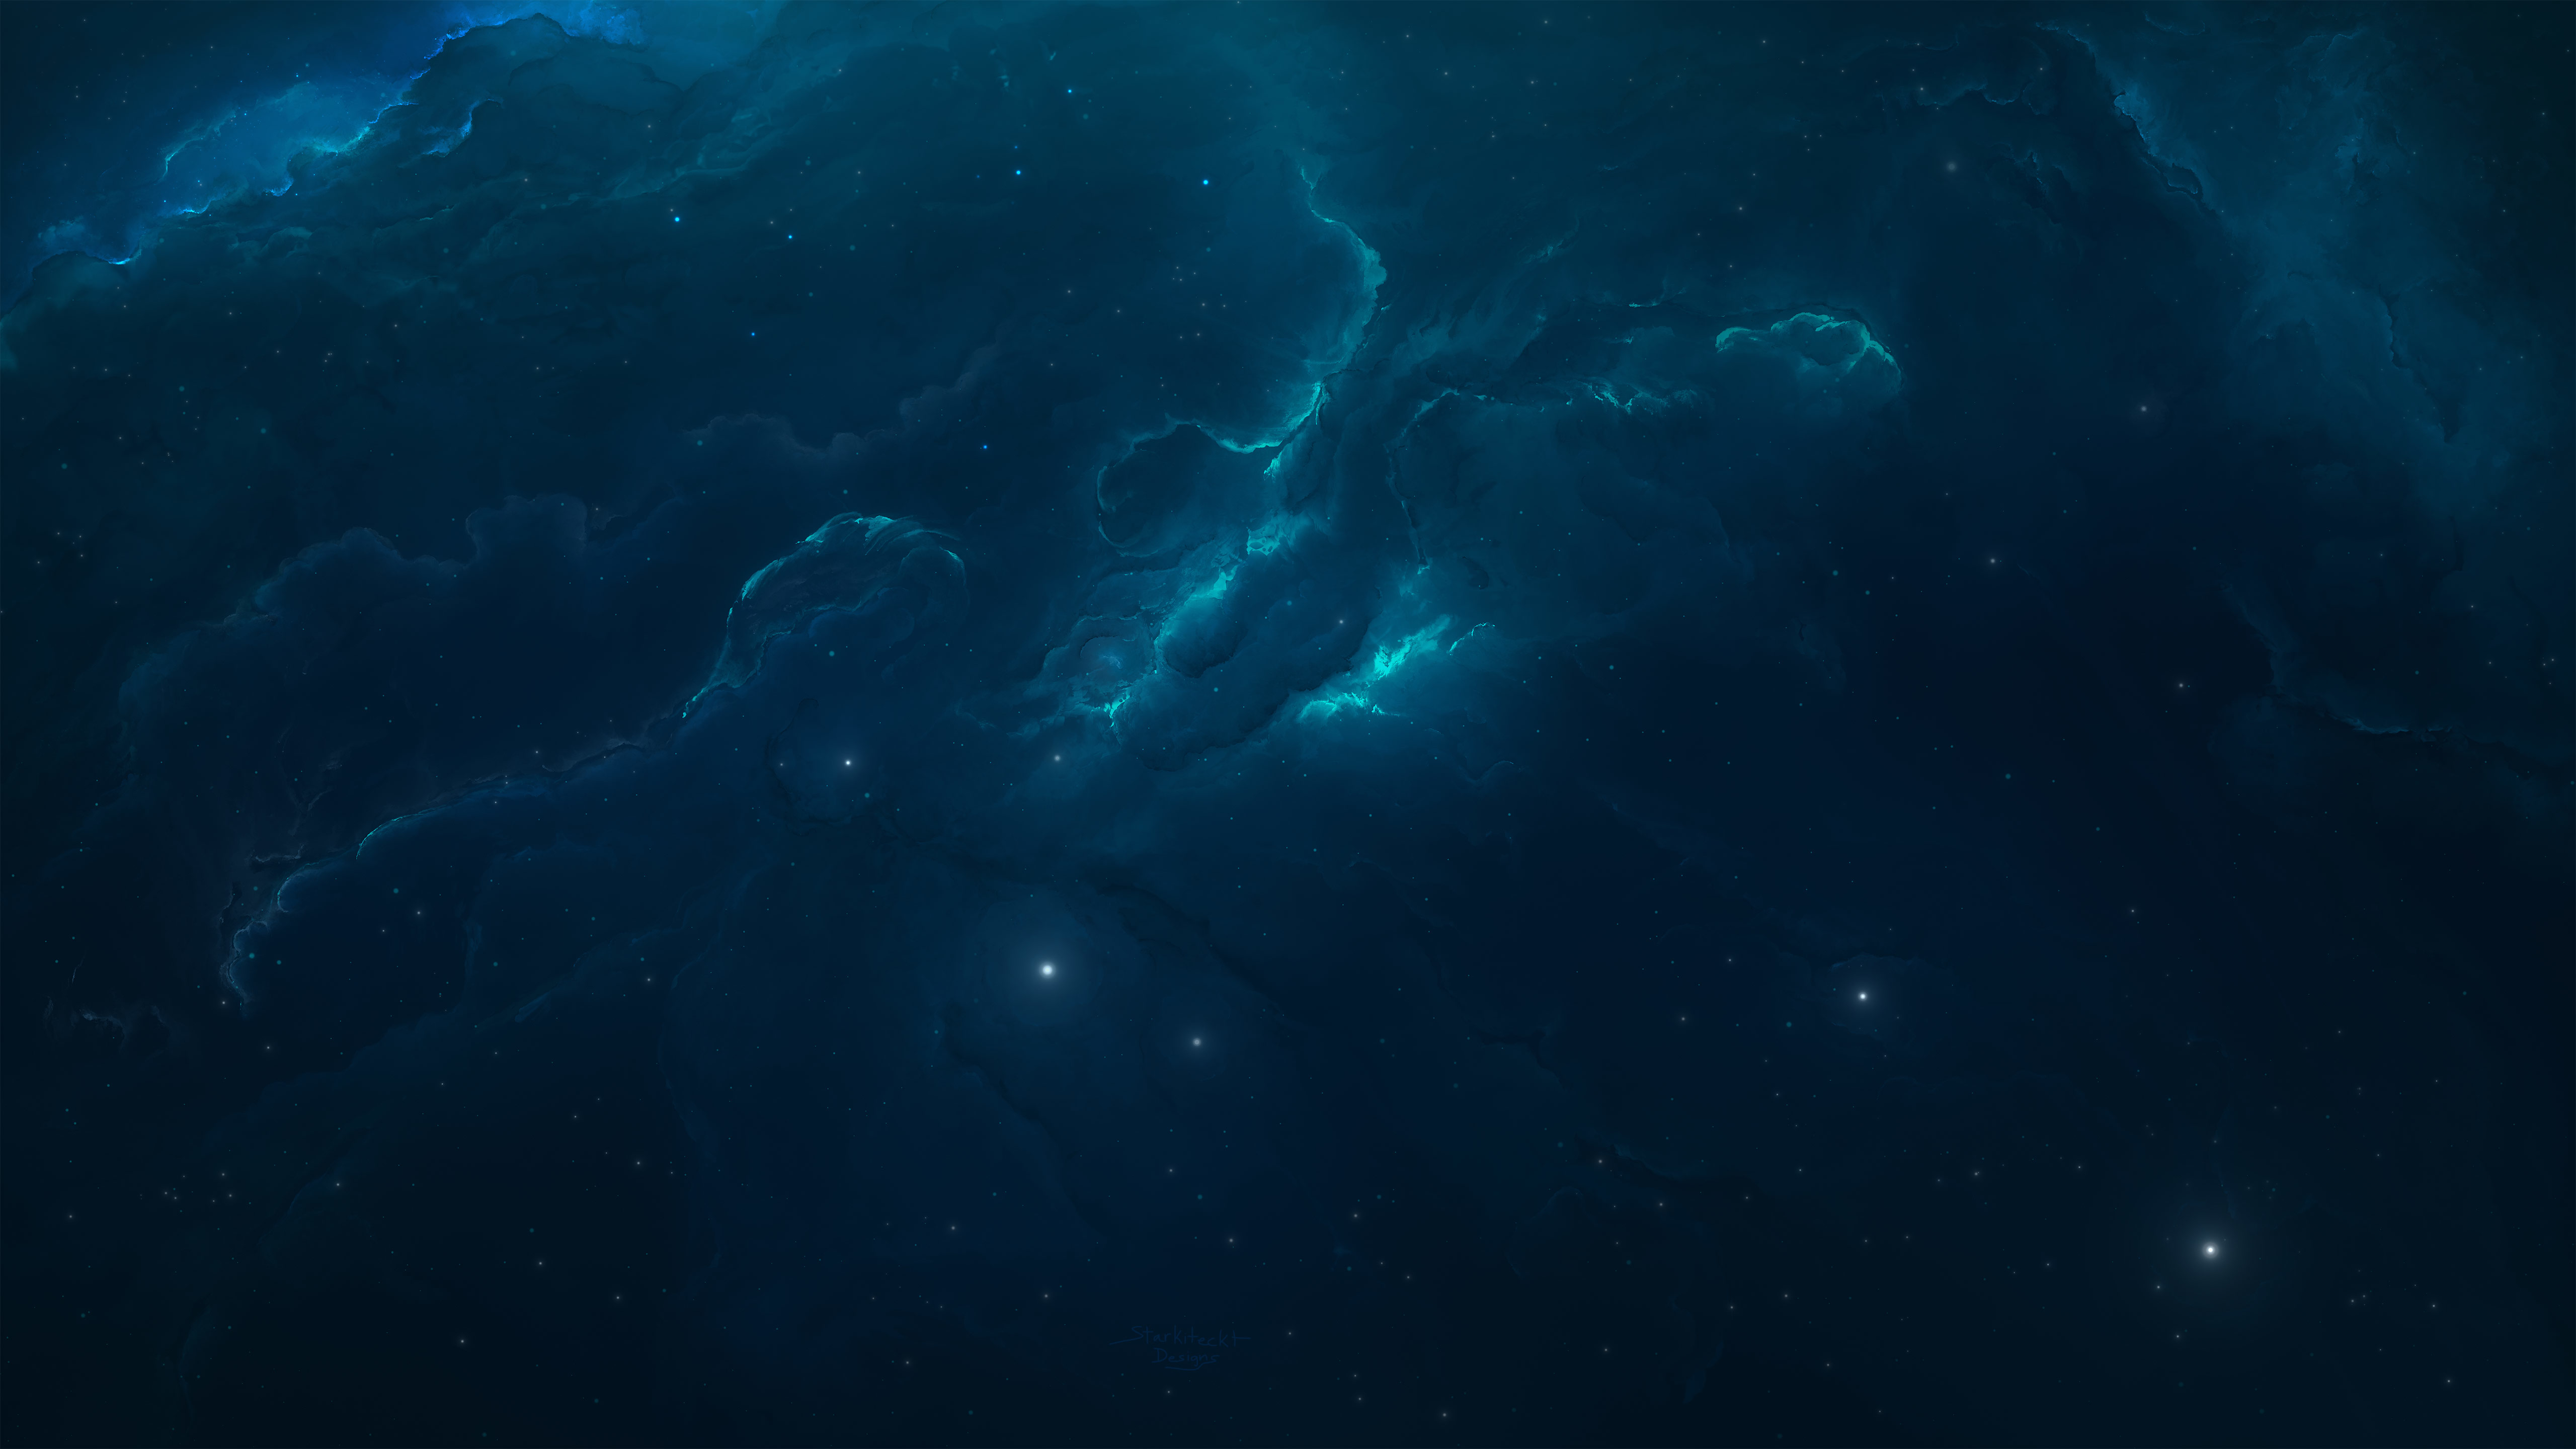 3840x21602019 Atlantis Nebula 16 3840x21602019 Resolution Wallpaper Hd